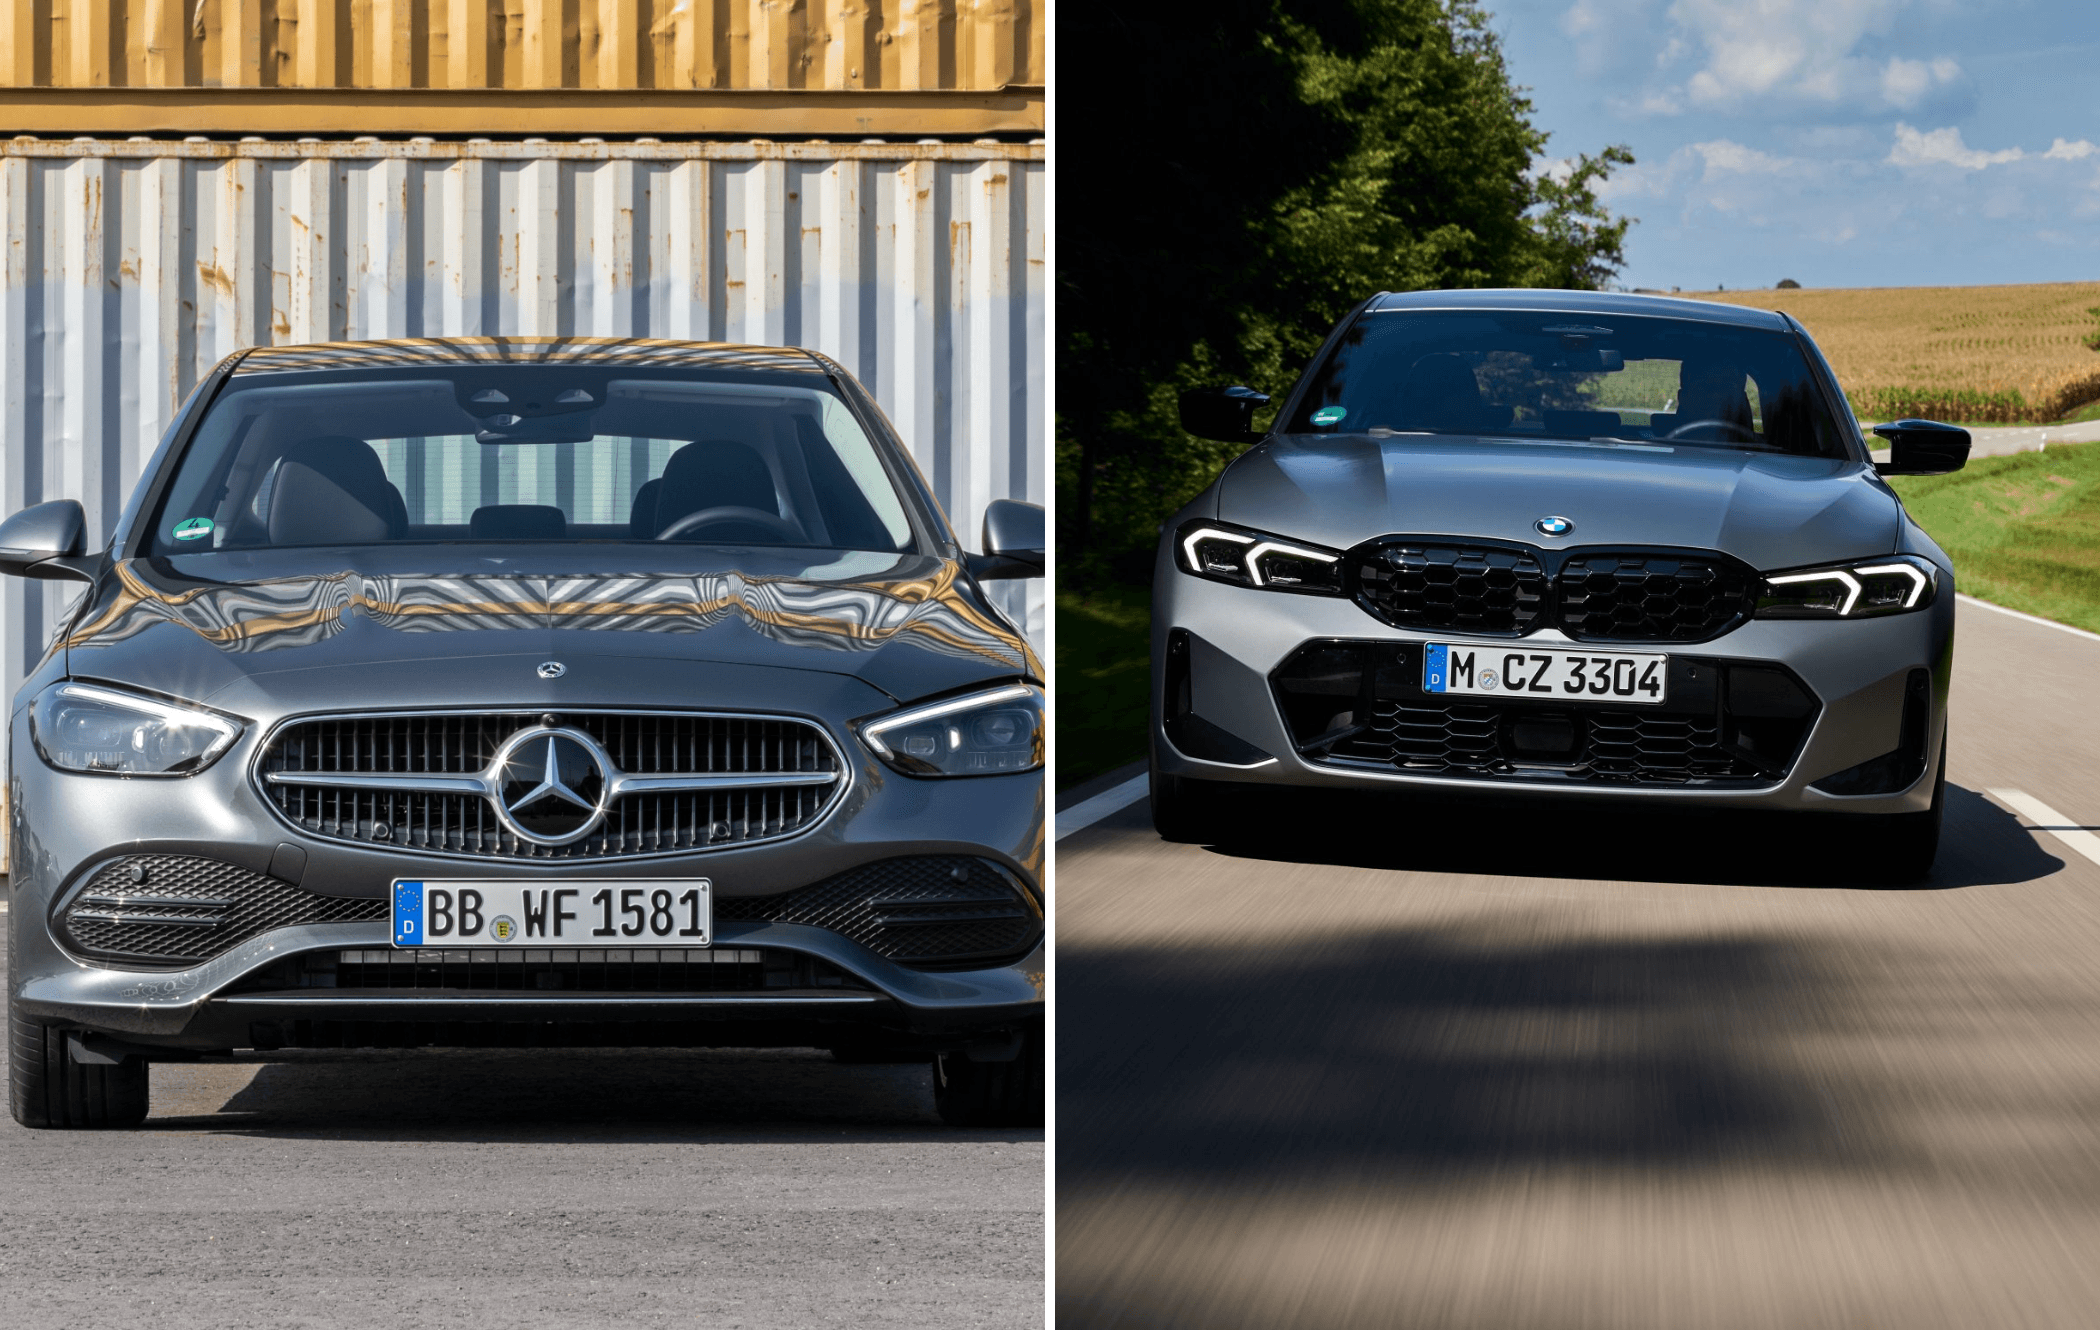 MercedesBenz CClass vs. BMW 3 Series which is better? cinch